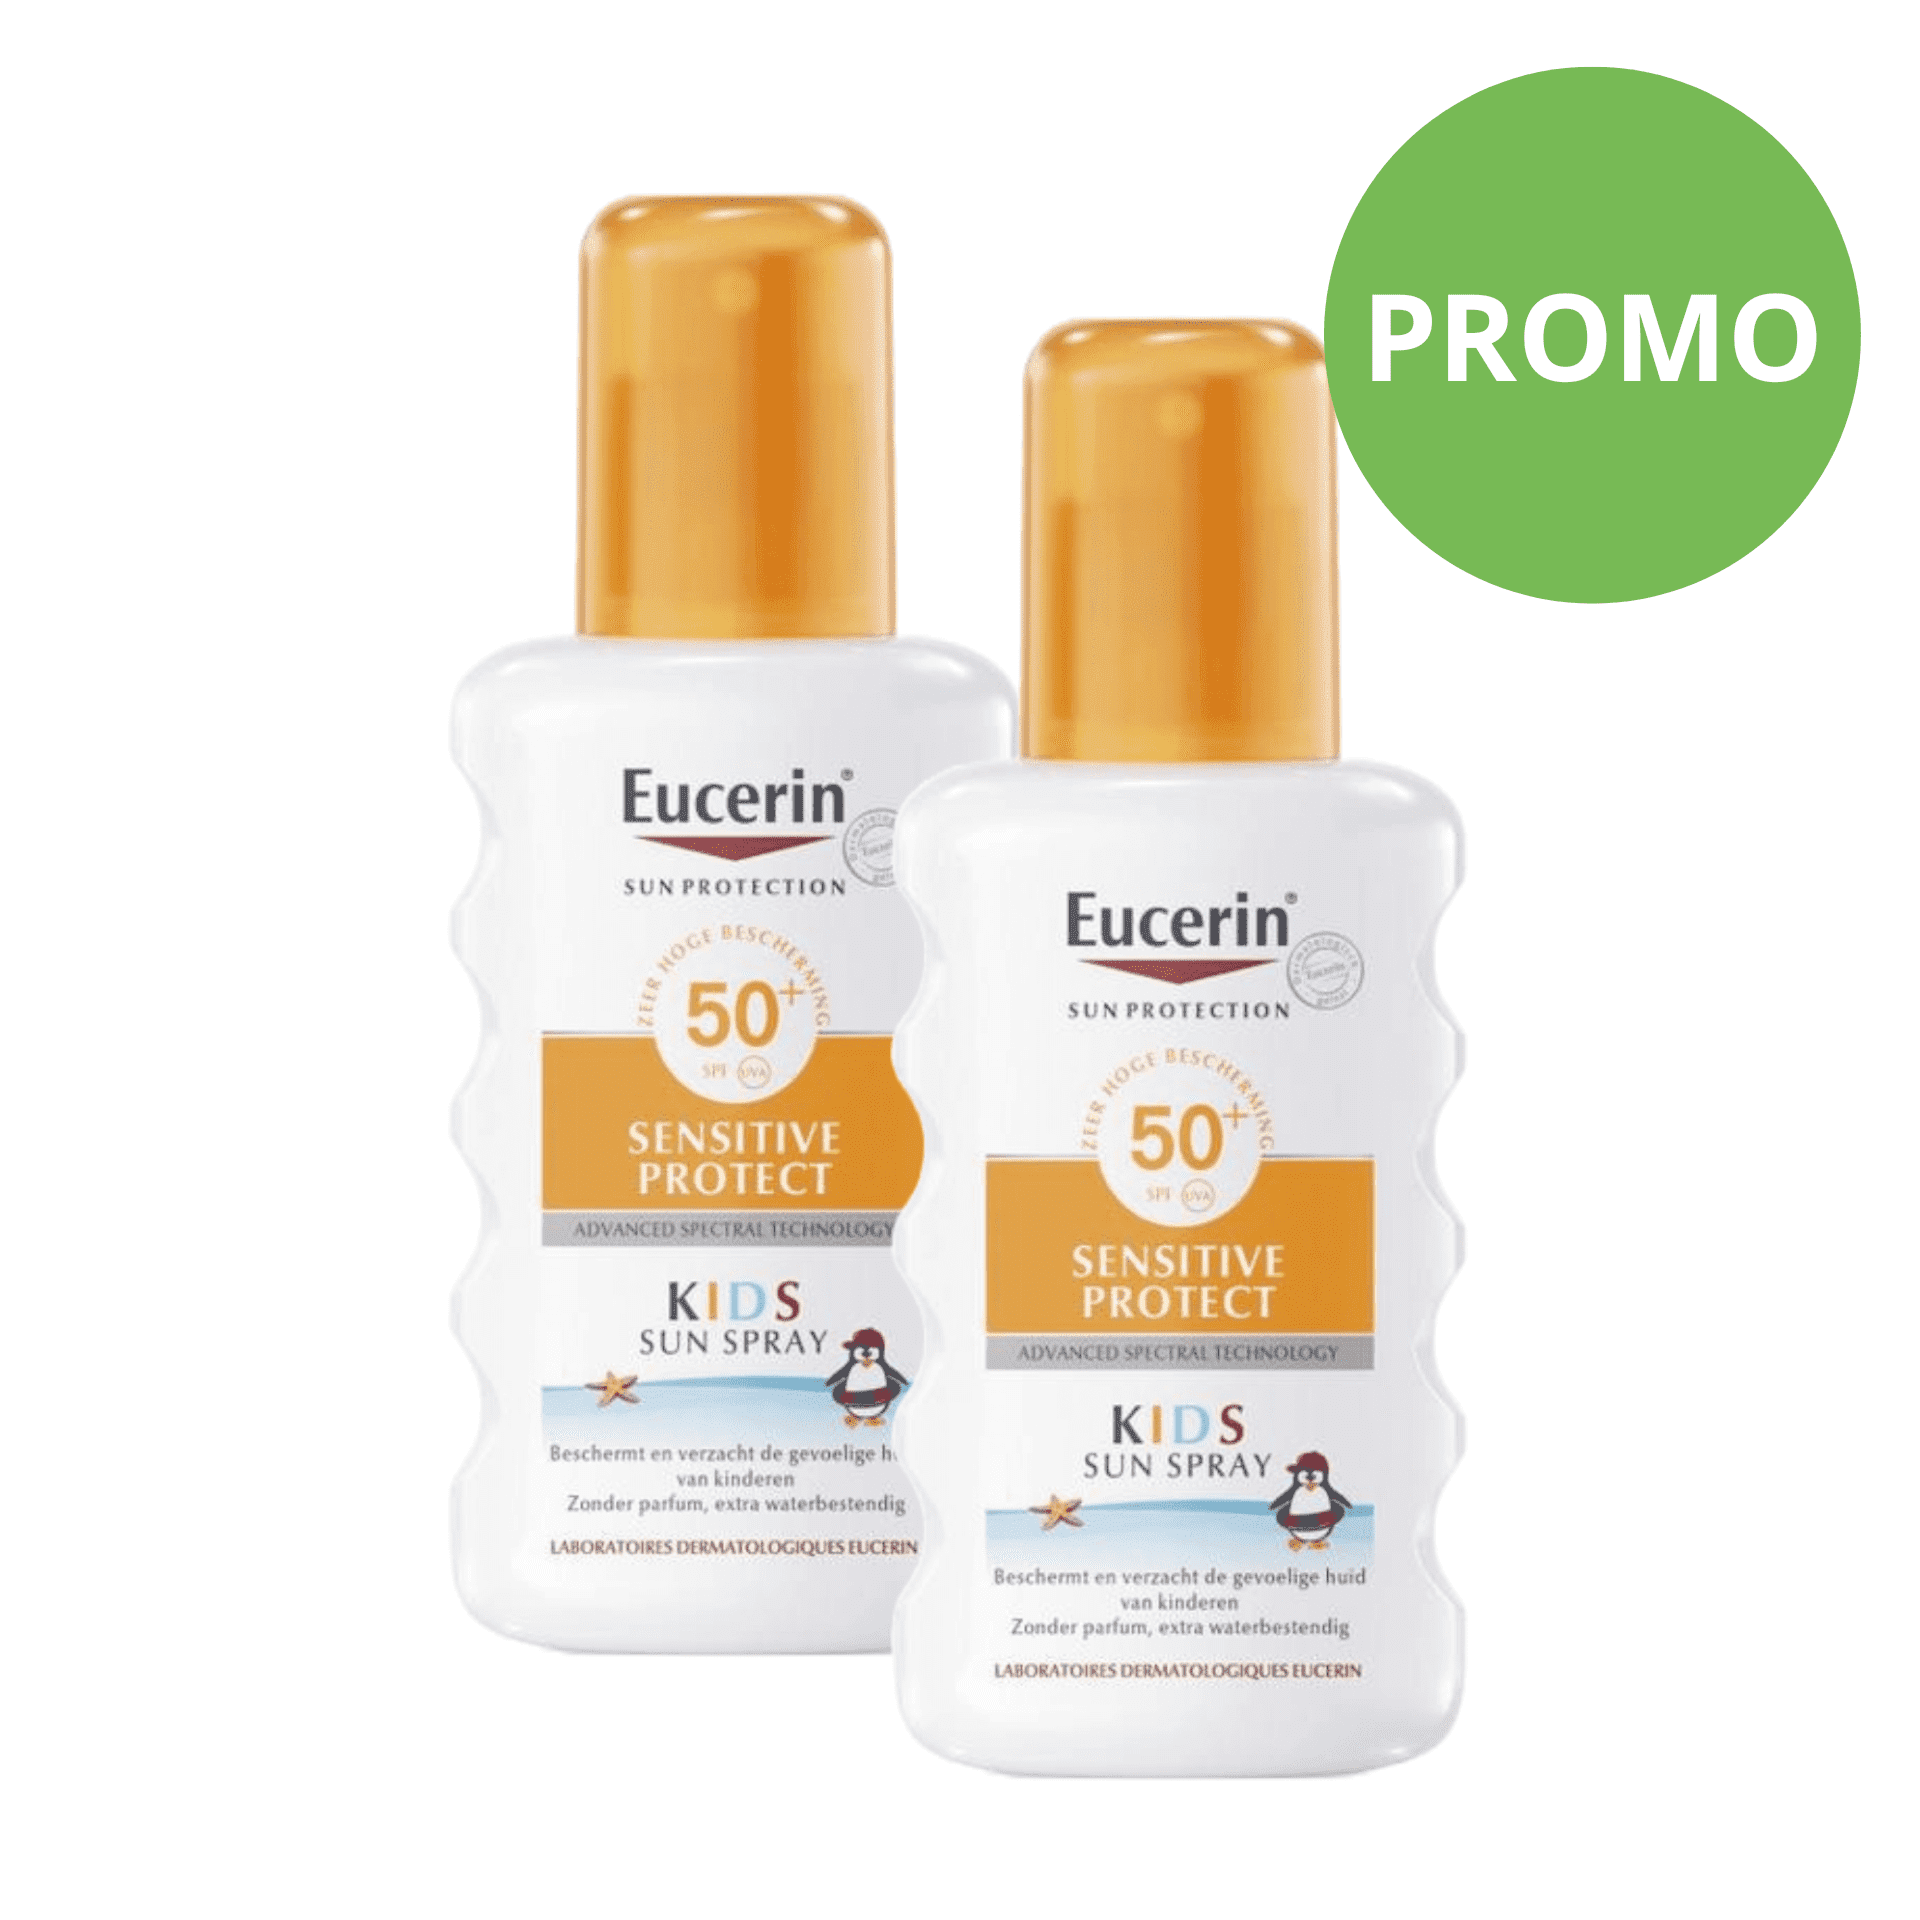 Eucerin Sensitive Protect Kids Sun Spray SPF50+ Duopack PROMO